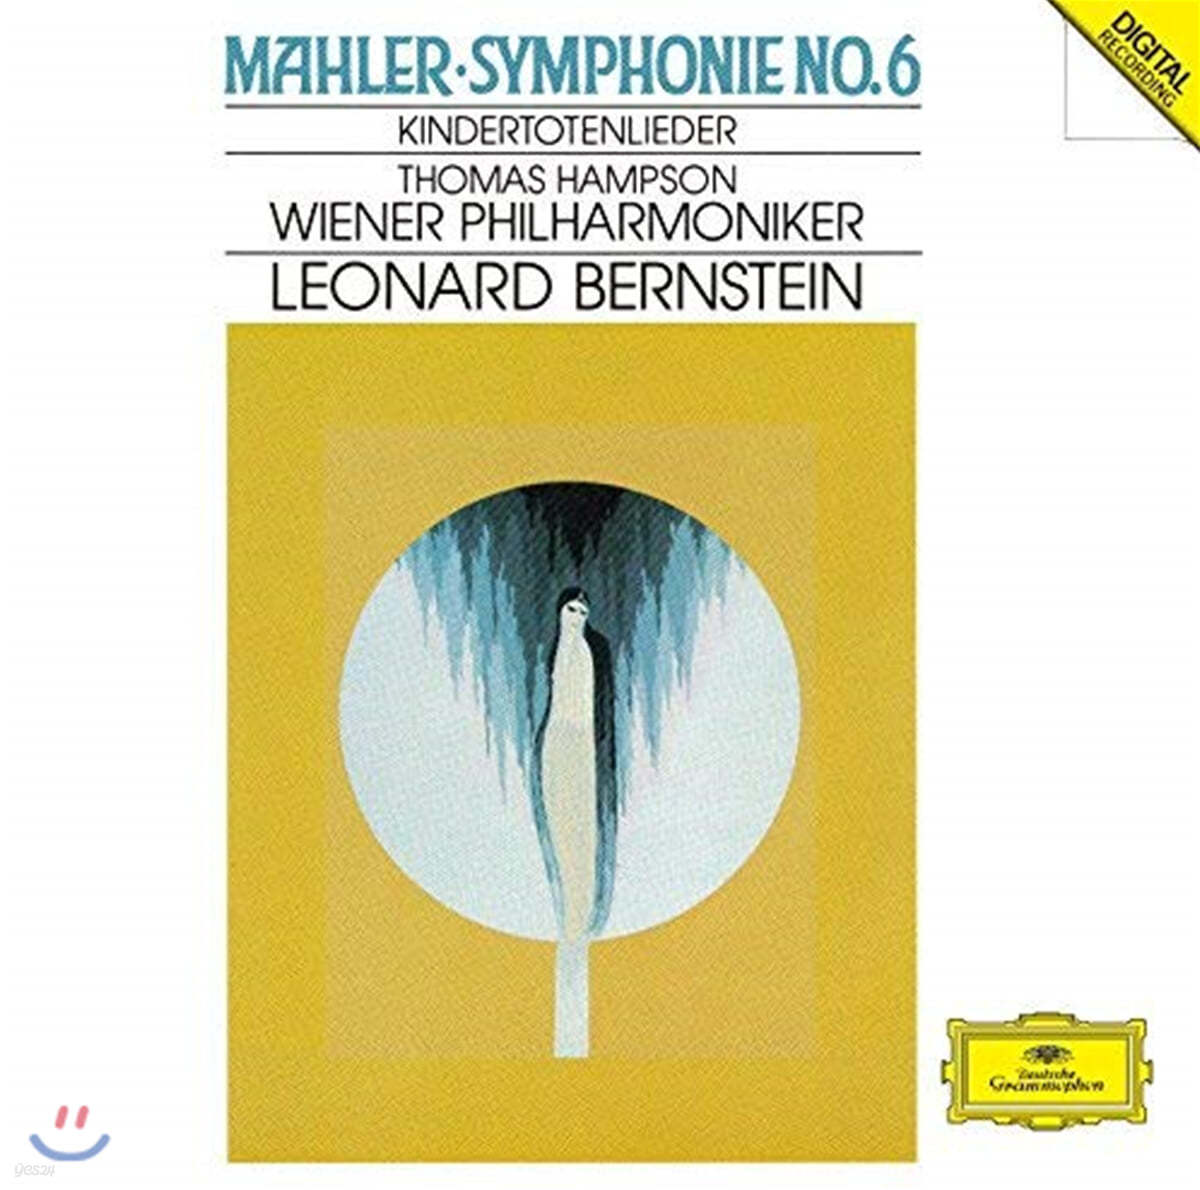 Leonard Bernstein 말러: 교향곡 6번, 죽은 아이를 그리는 노래 (Mahler: Symphony No. 6, Kindertotenlieder)